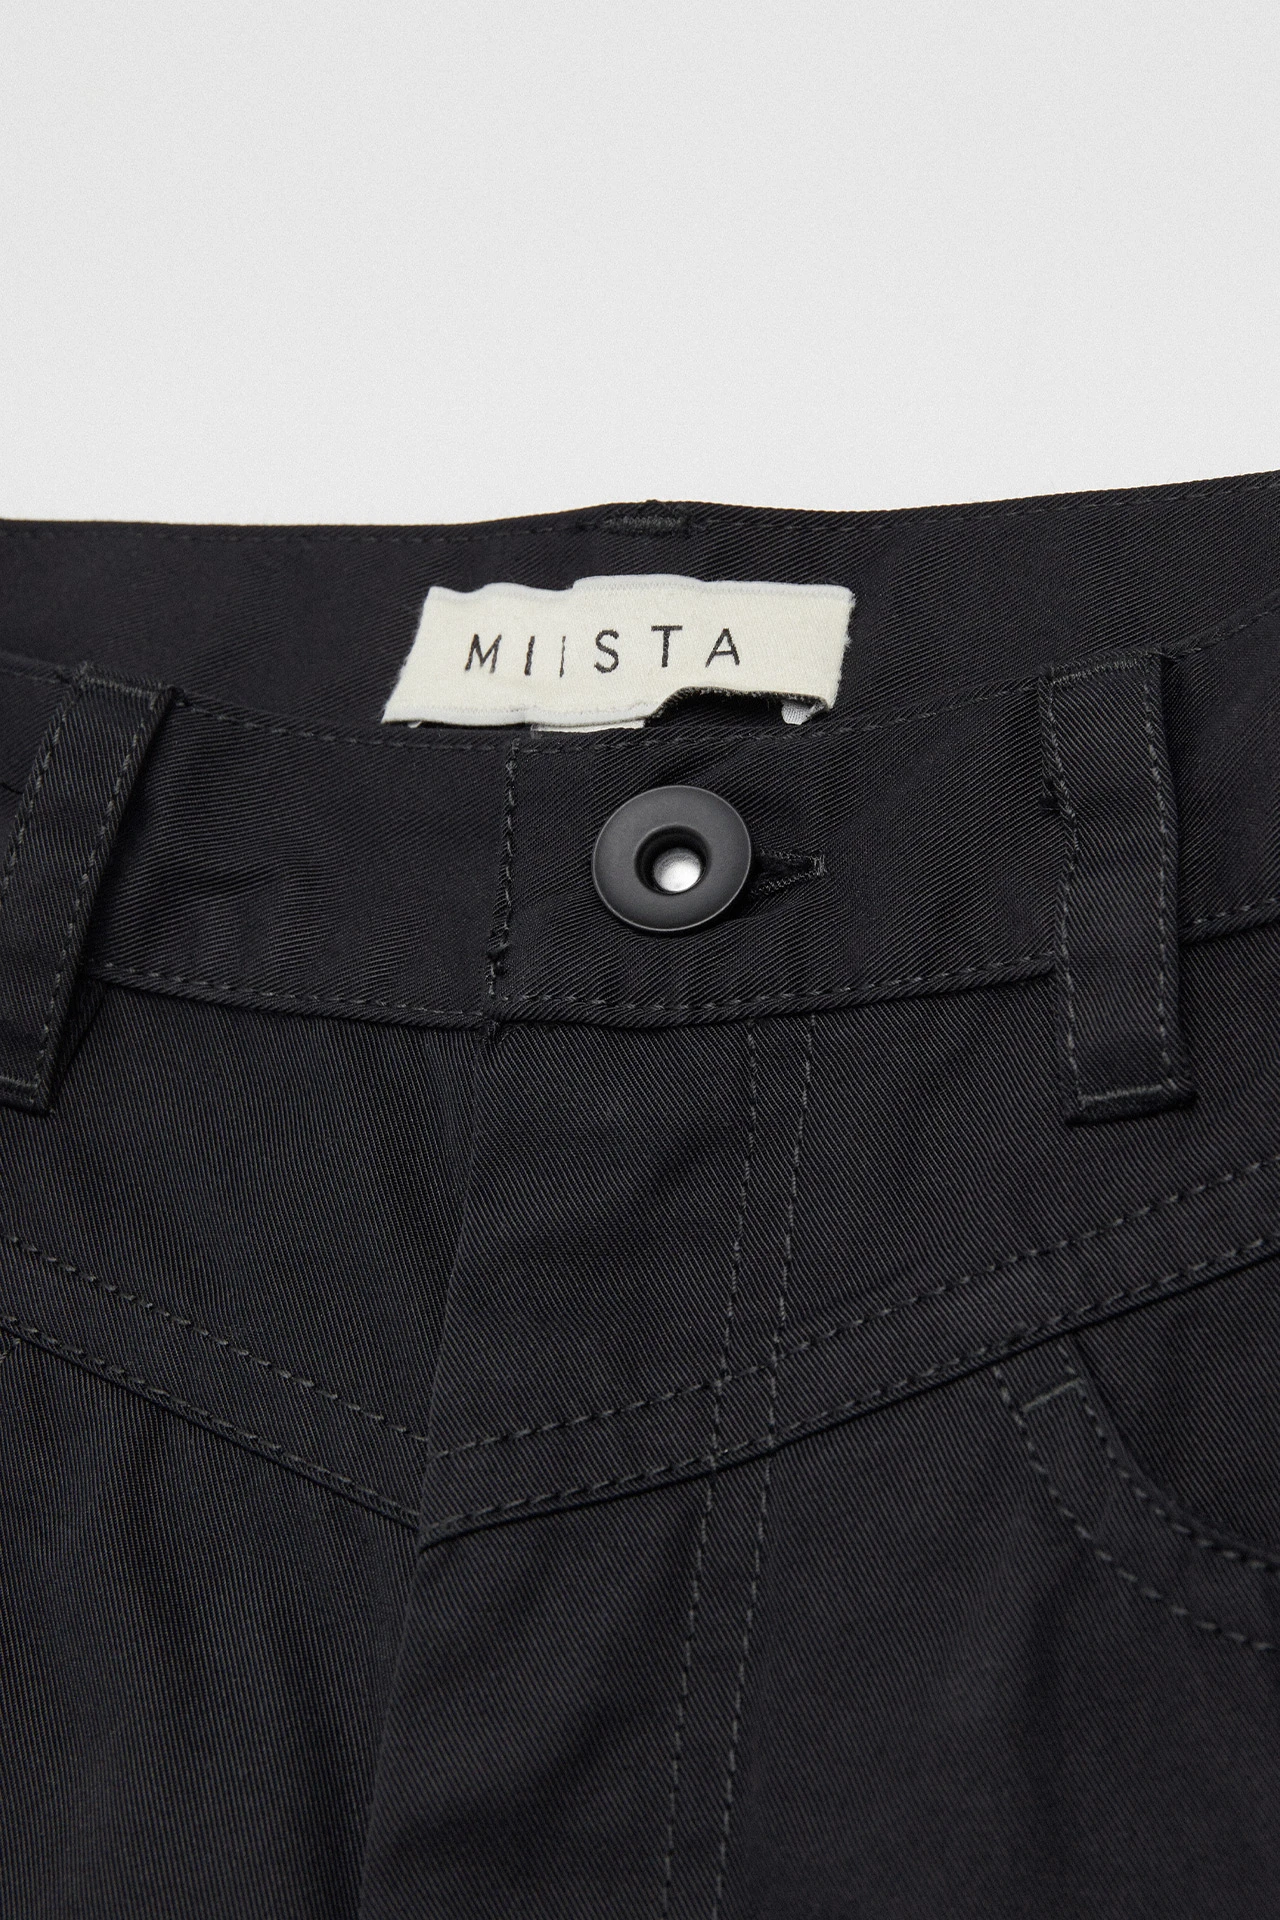 Miista-abai-black-trousers-02